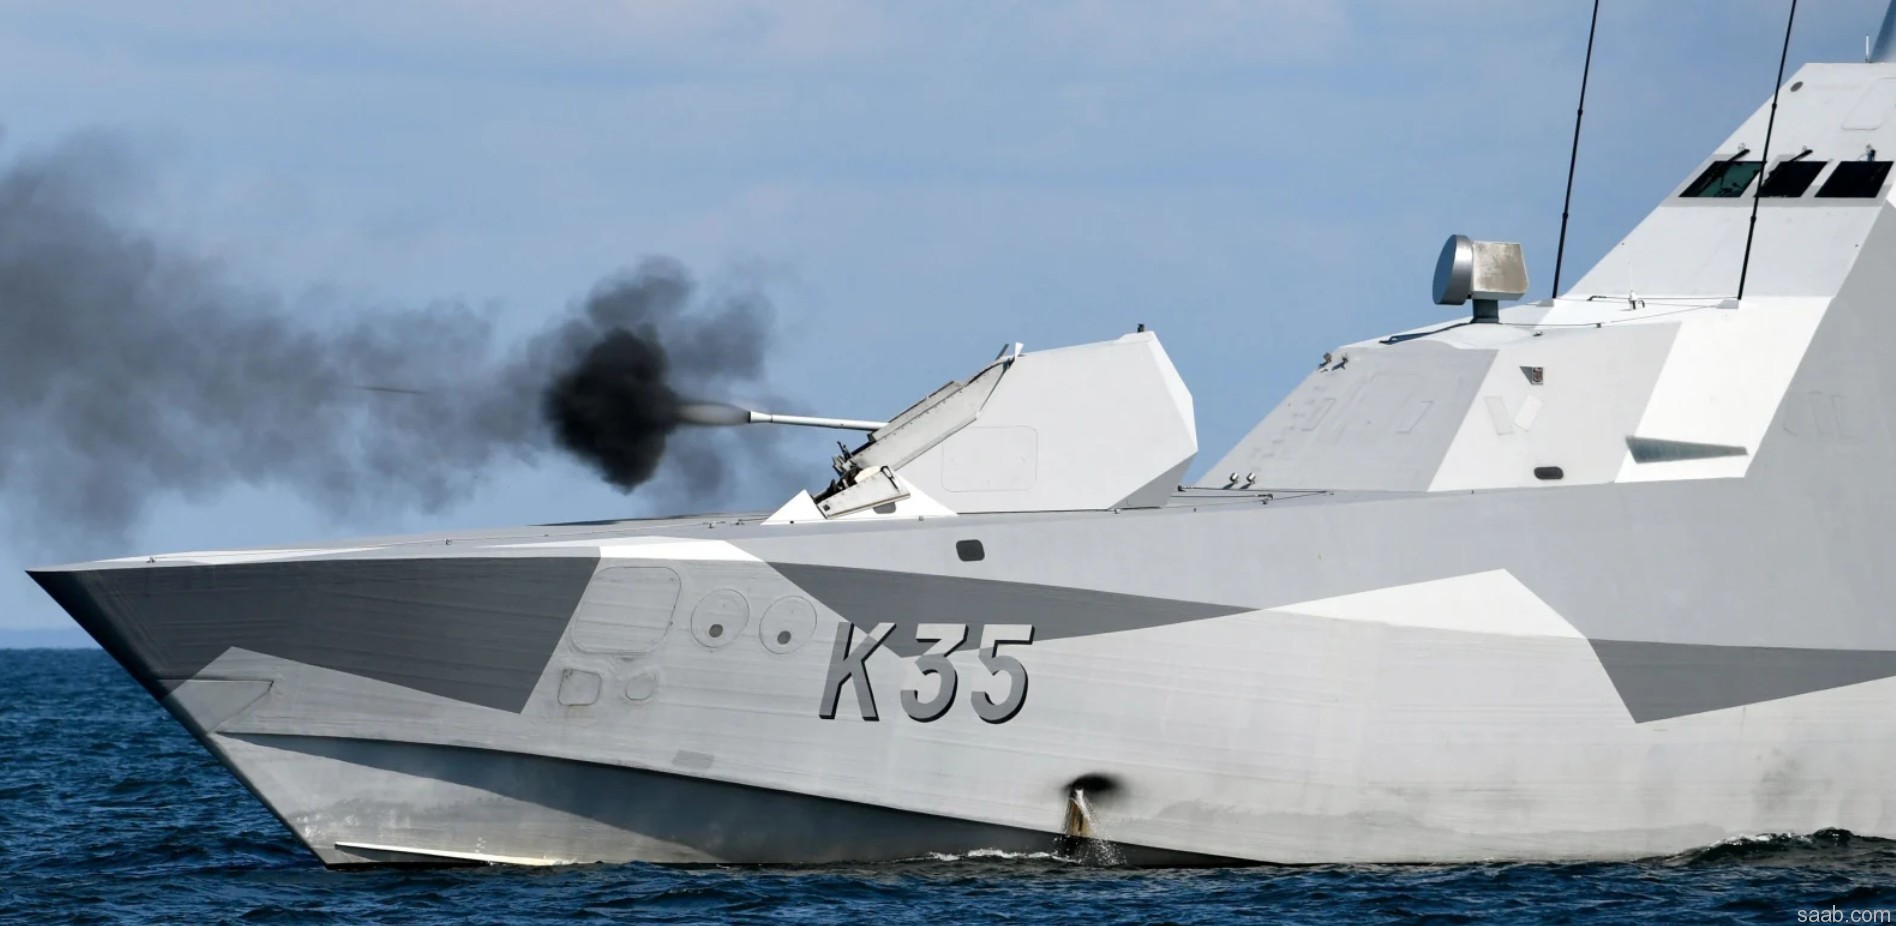 k35 hswms hms karlstad visby class corvette royal swedish navy svenska marinen bofors mk.3 gun fire 29